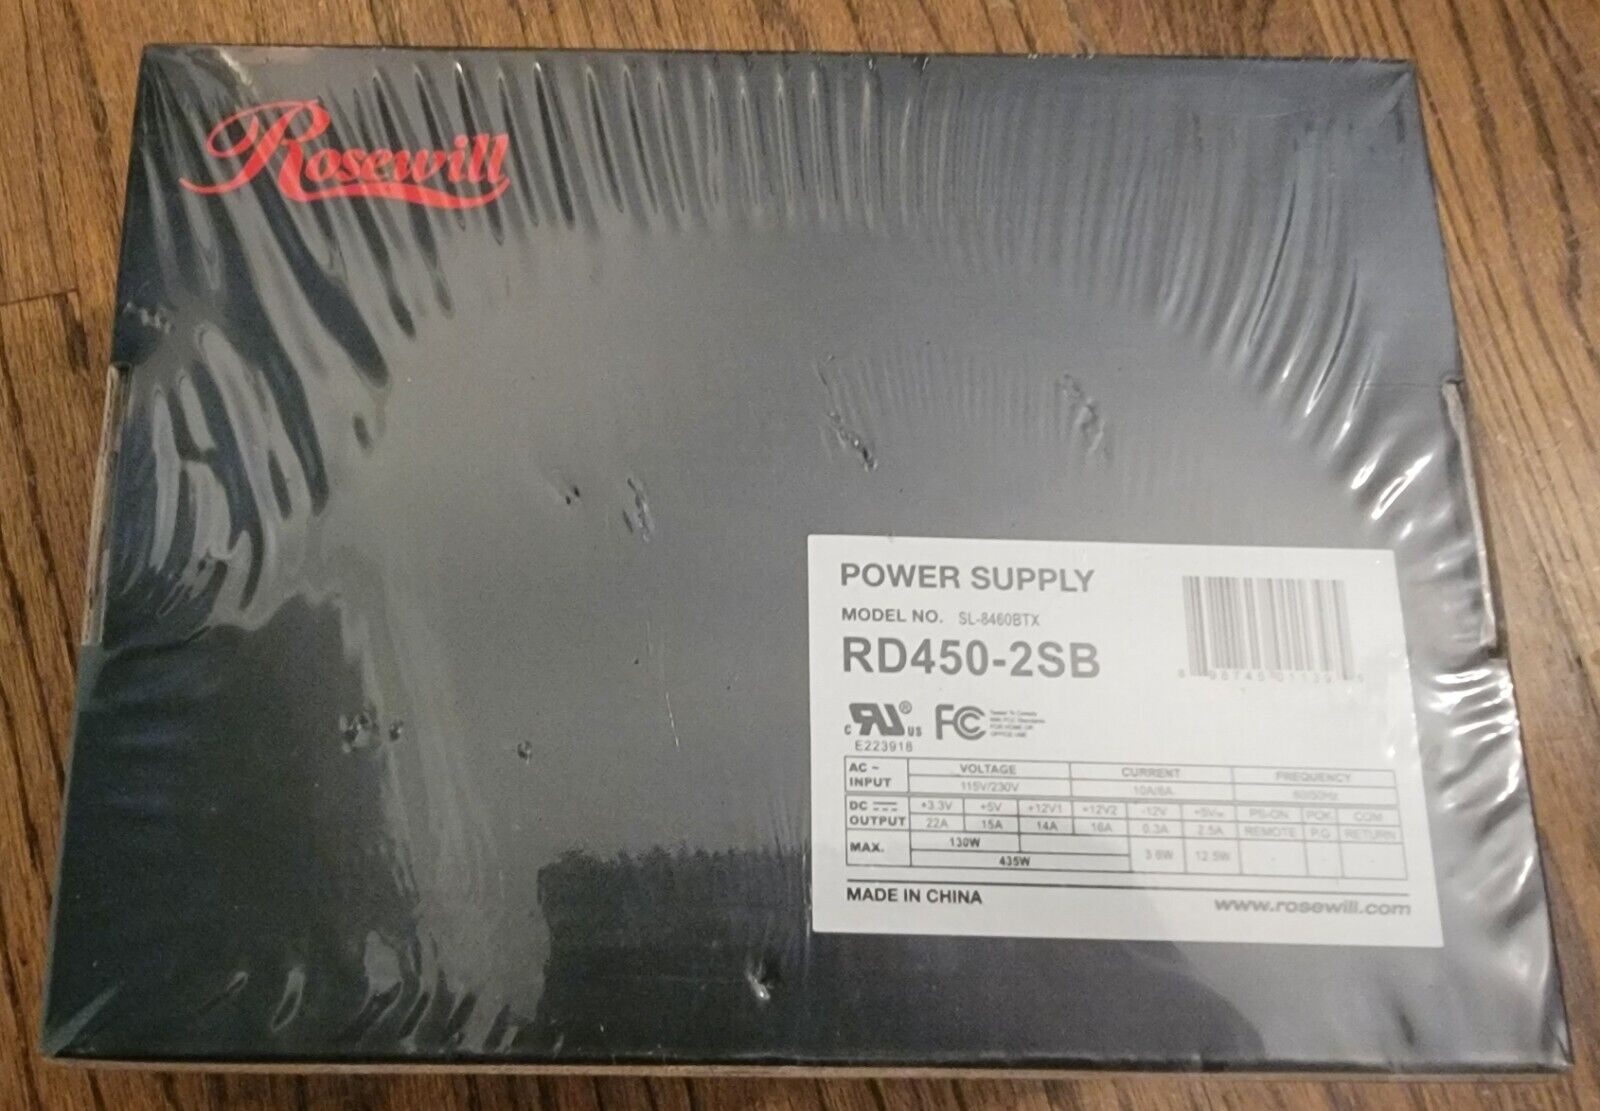 Rosewill RD450-2DB 450W Max Model Power Supply ATX - NEW IN BOX